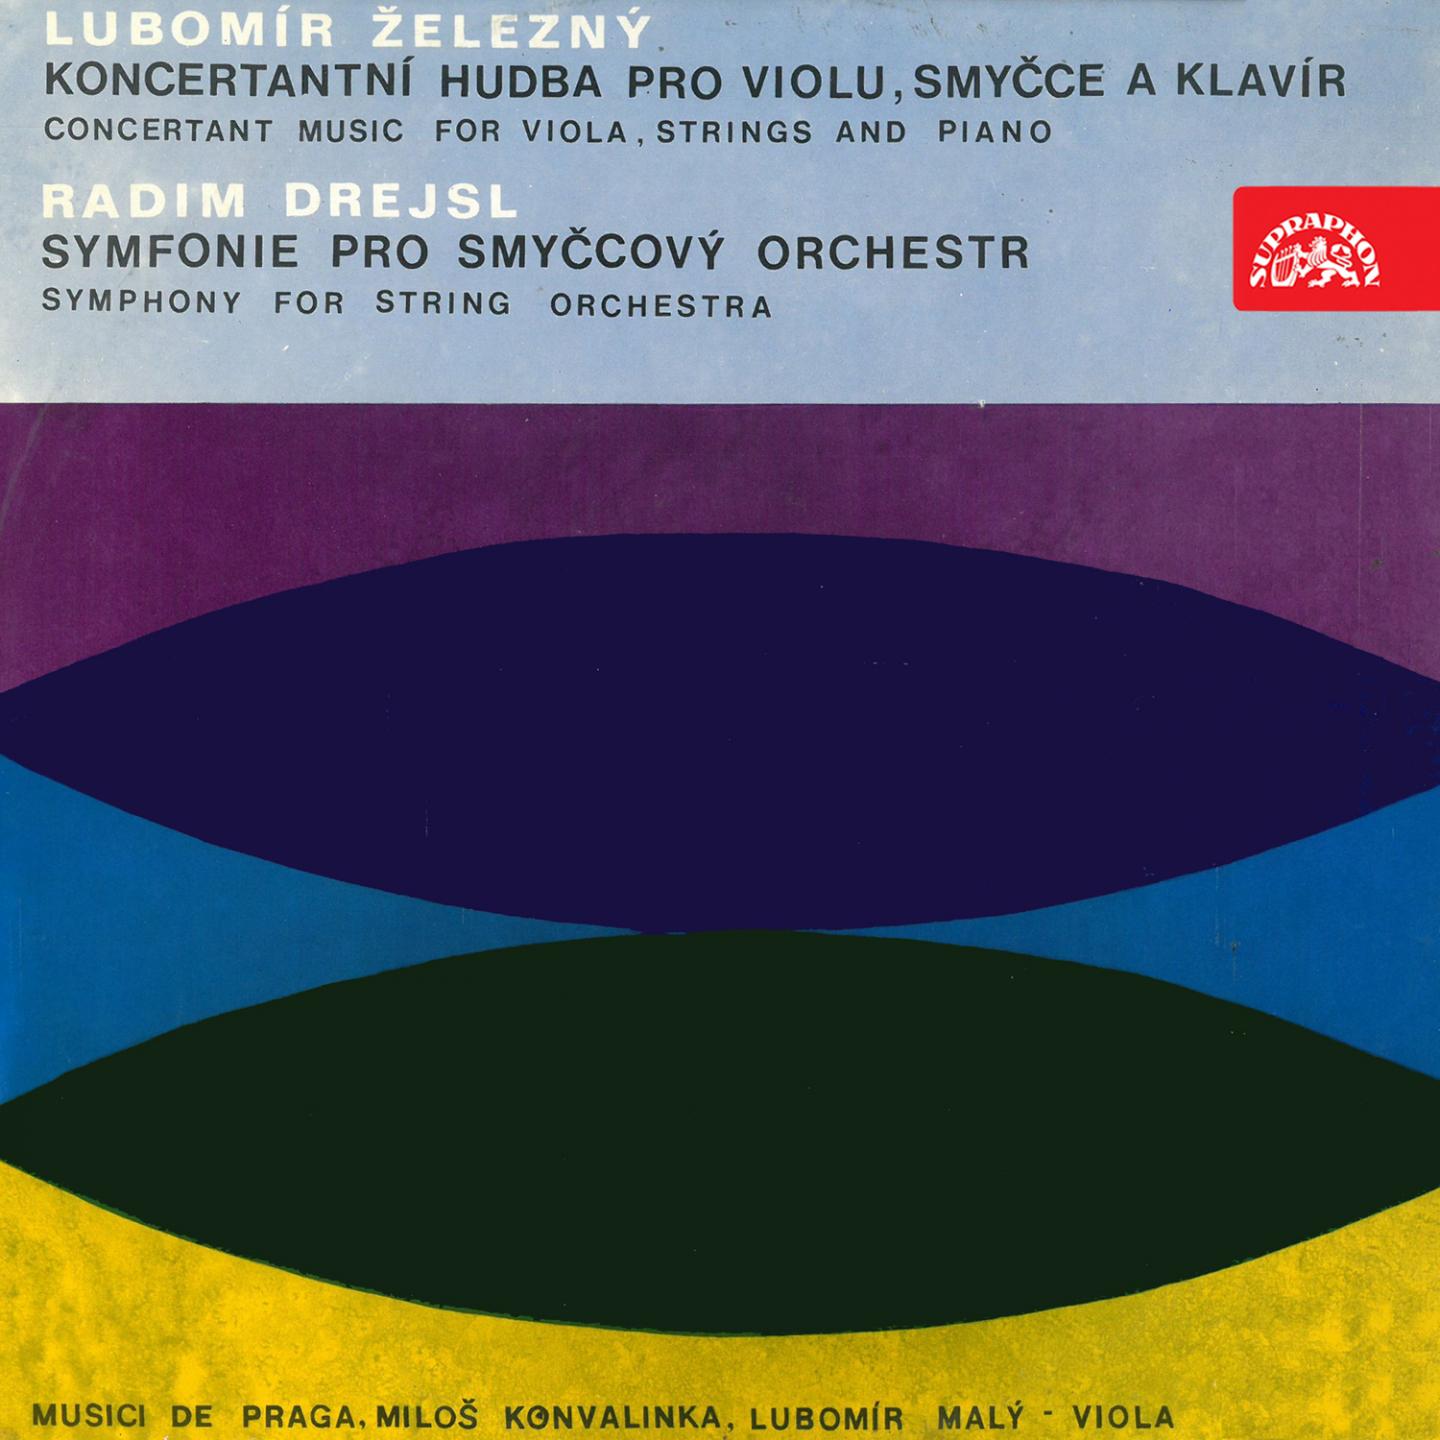 Symphony for Strings Orchestra: I. Moderato calmo. poco piu animato